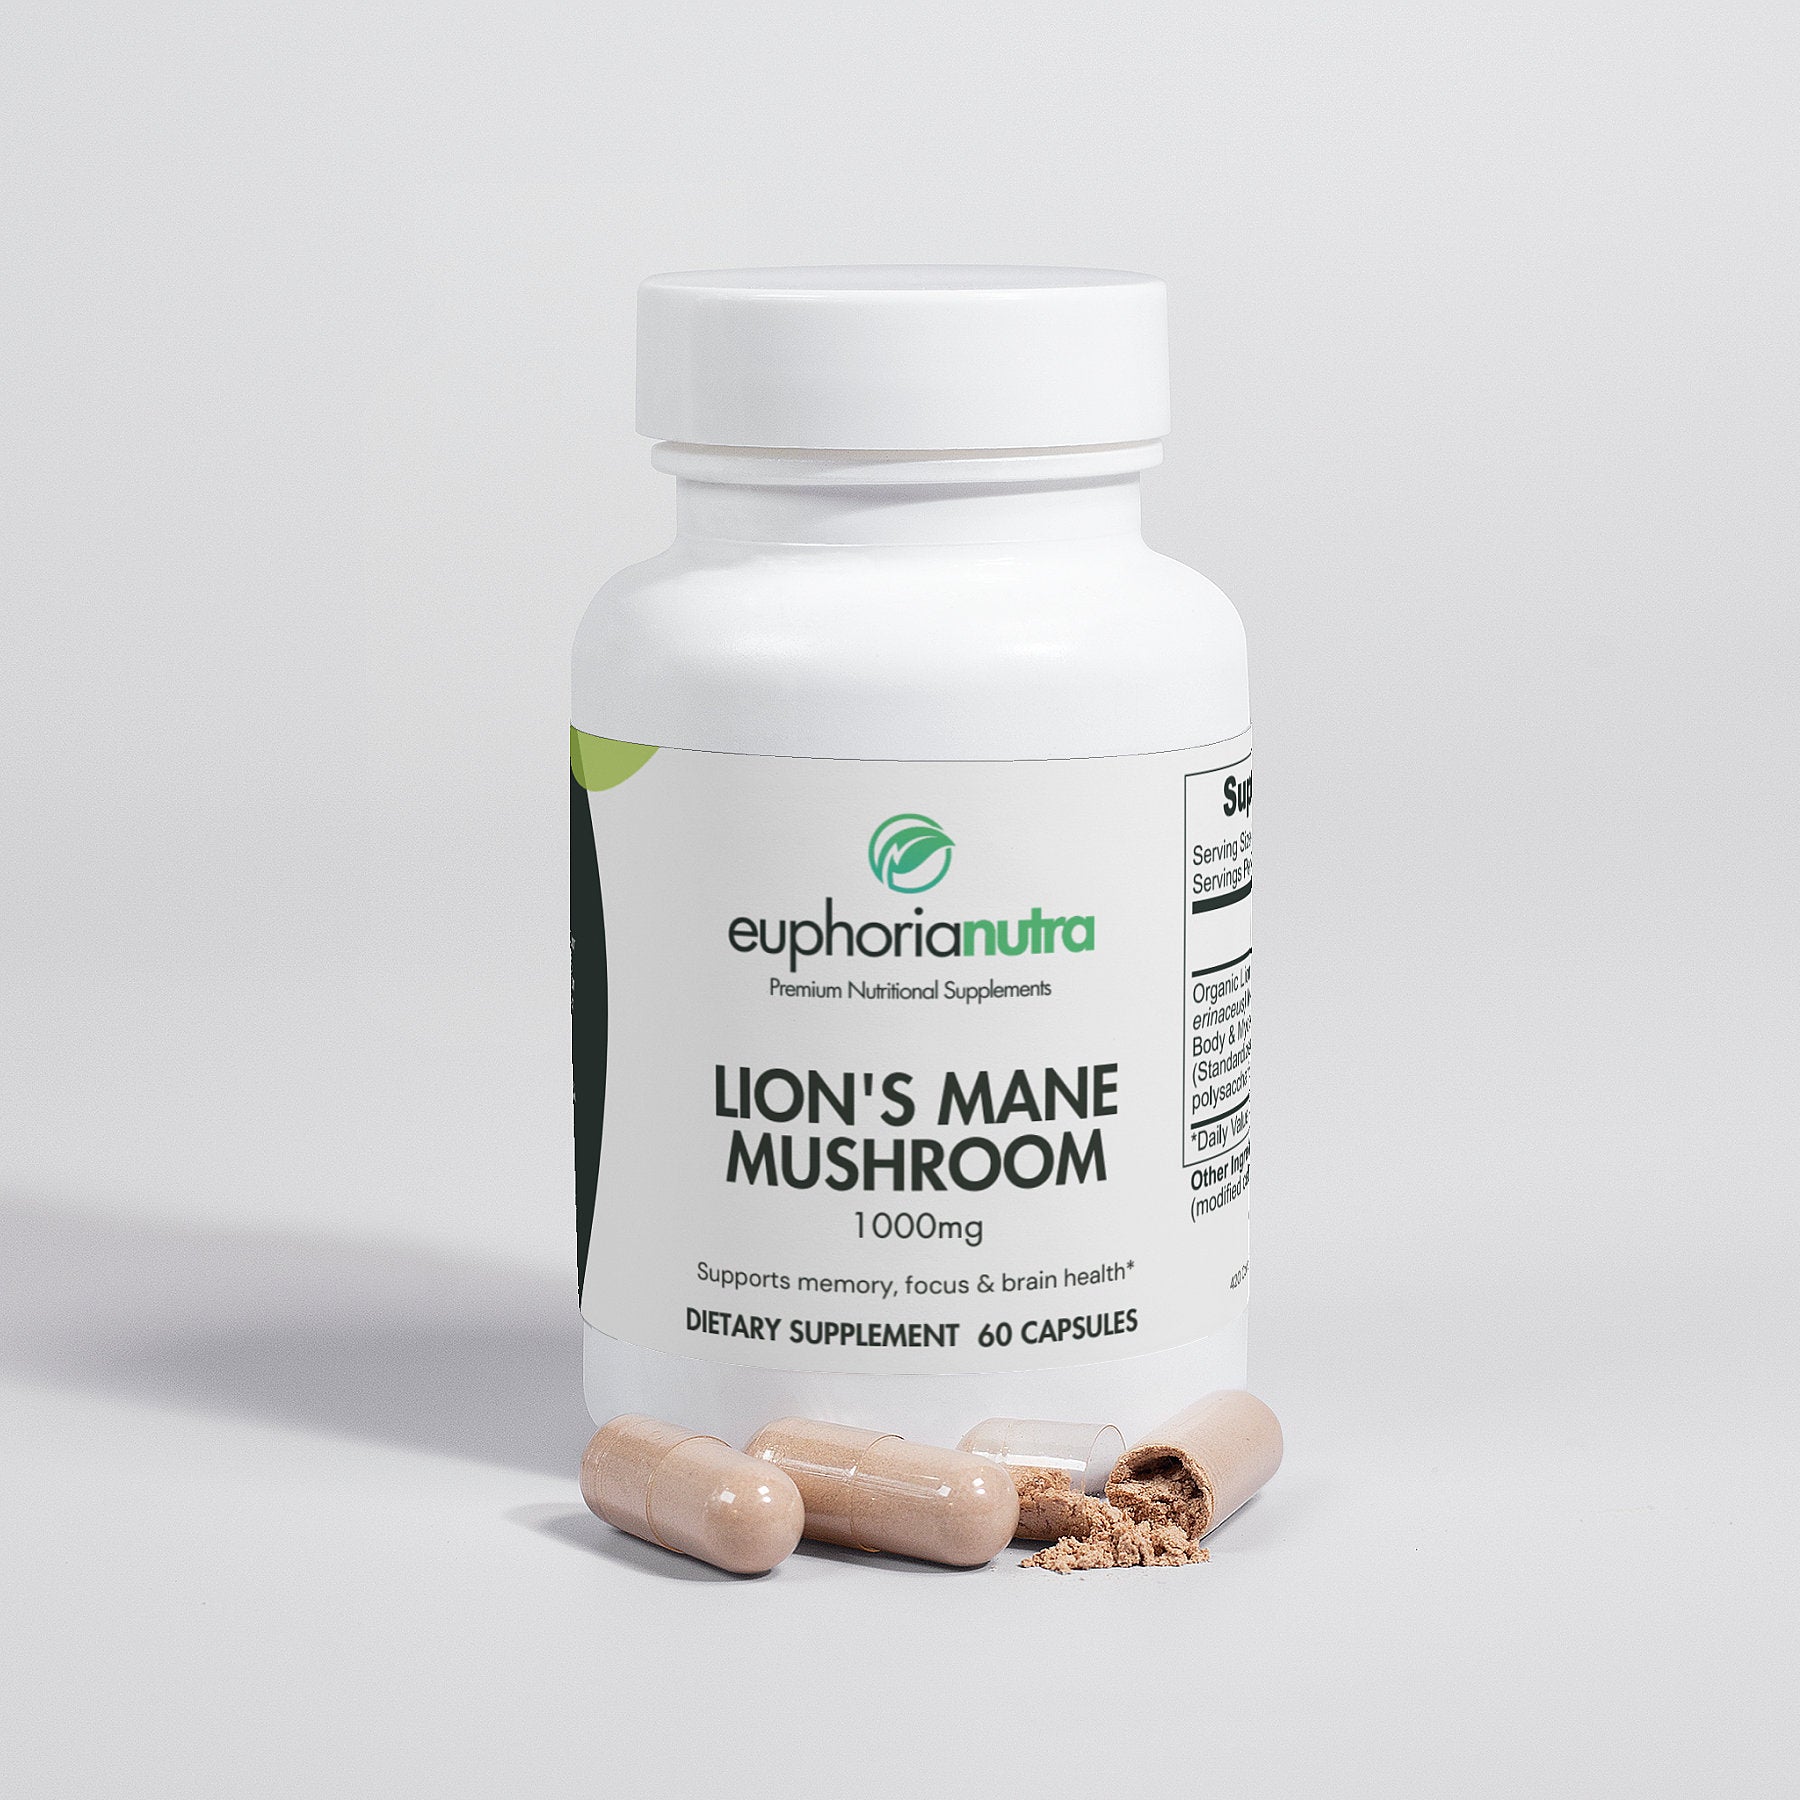 Lions-Mane-Mushroom-euphorianutra-supplements